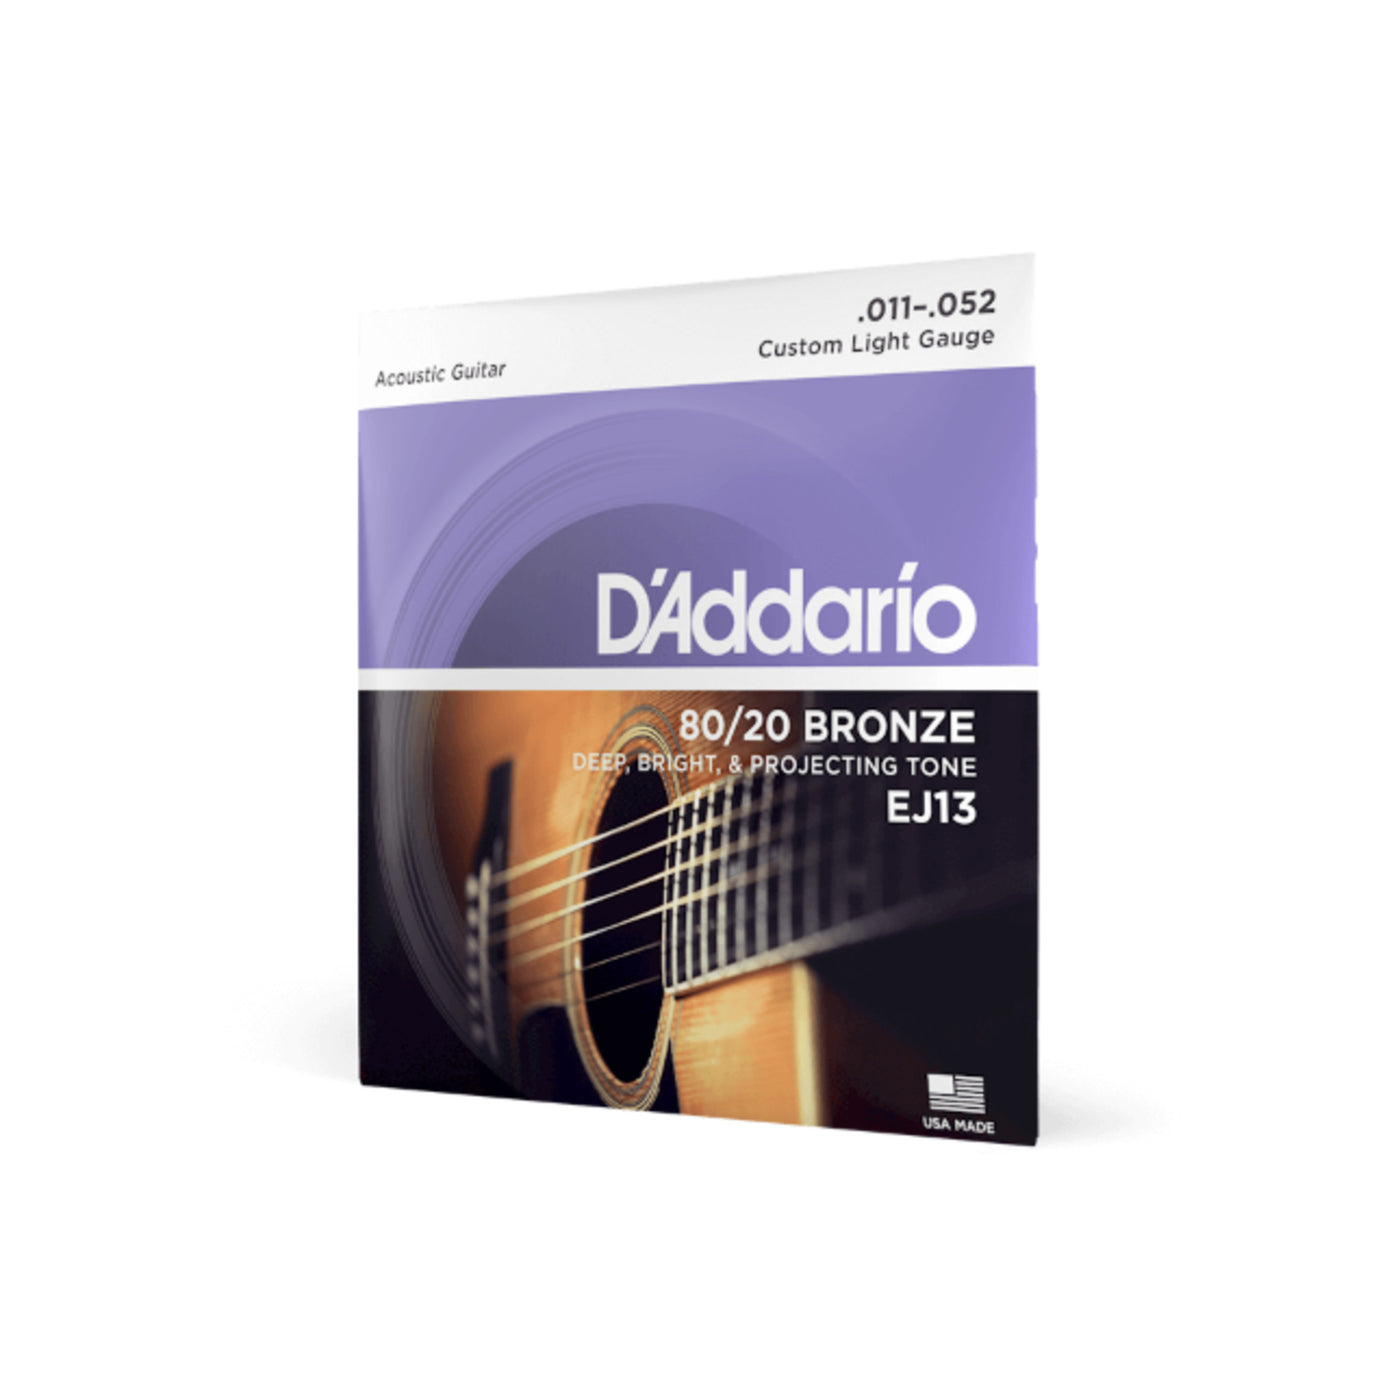 D'Addario 80/20 Bronze Acoustic Guitar Strings, Custom Light, 11-52 (EJ13)